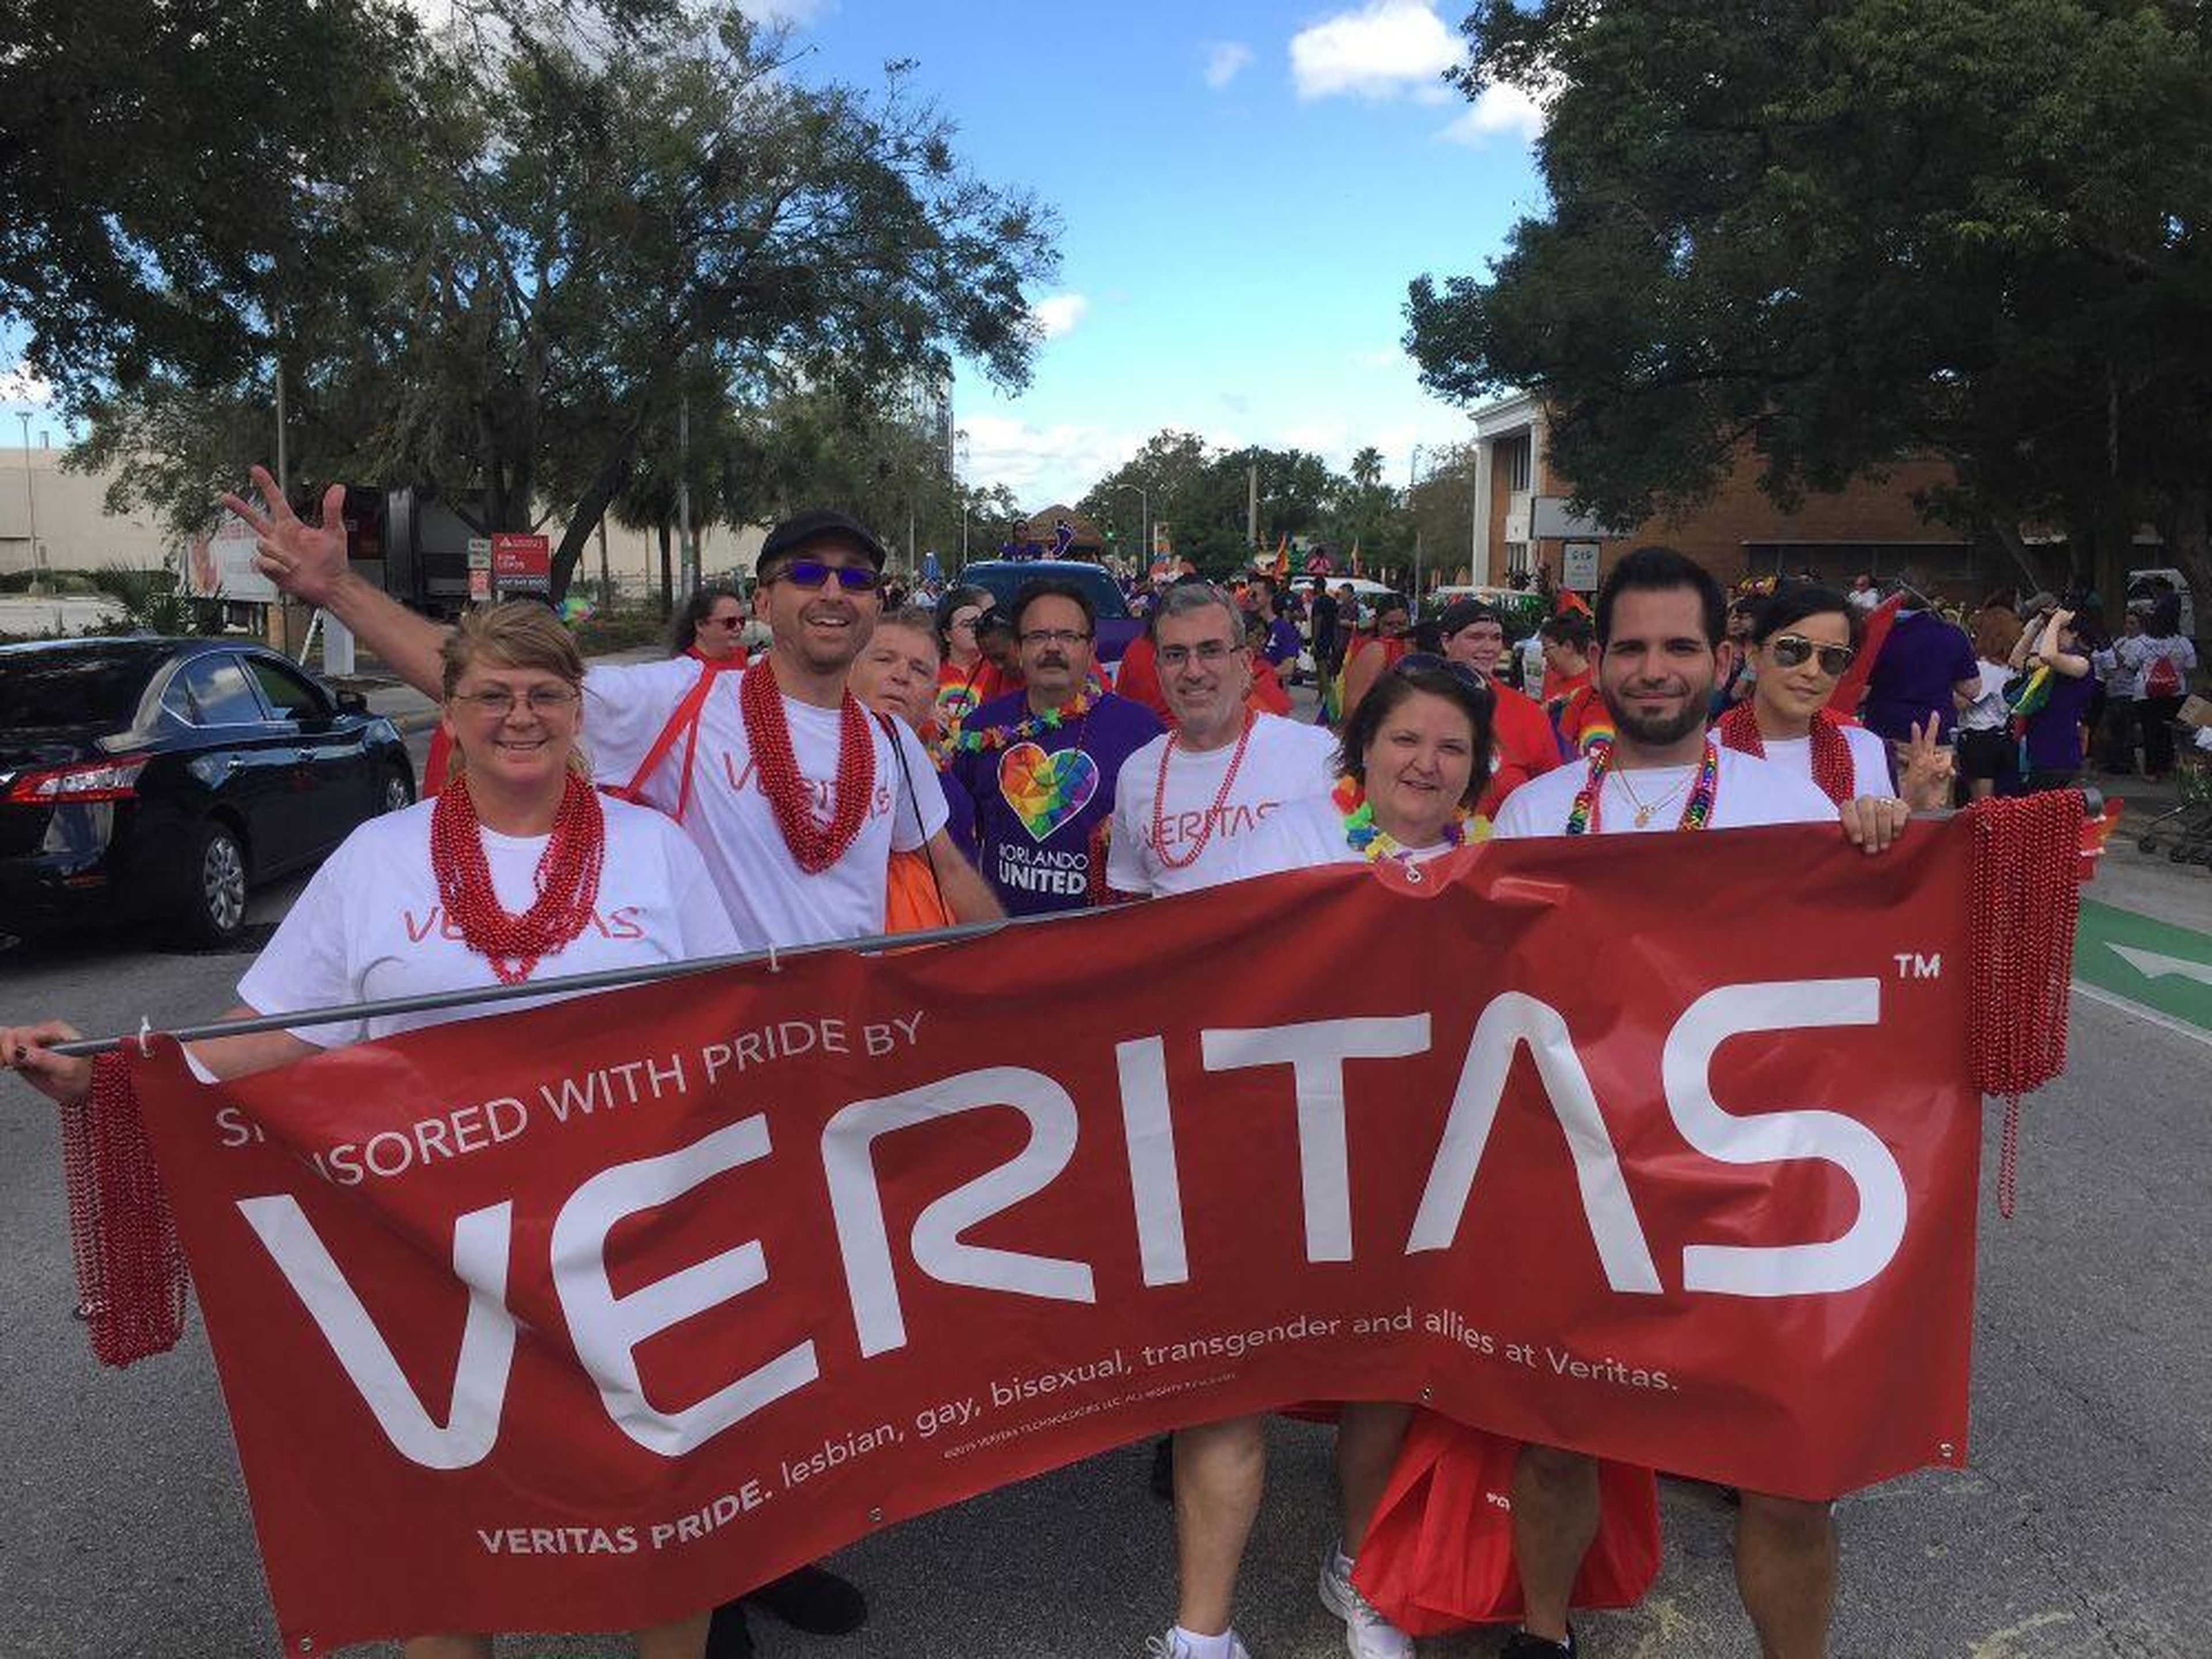 Veritas employees at a Pride parade.